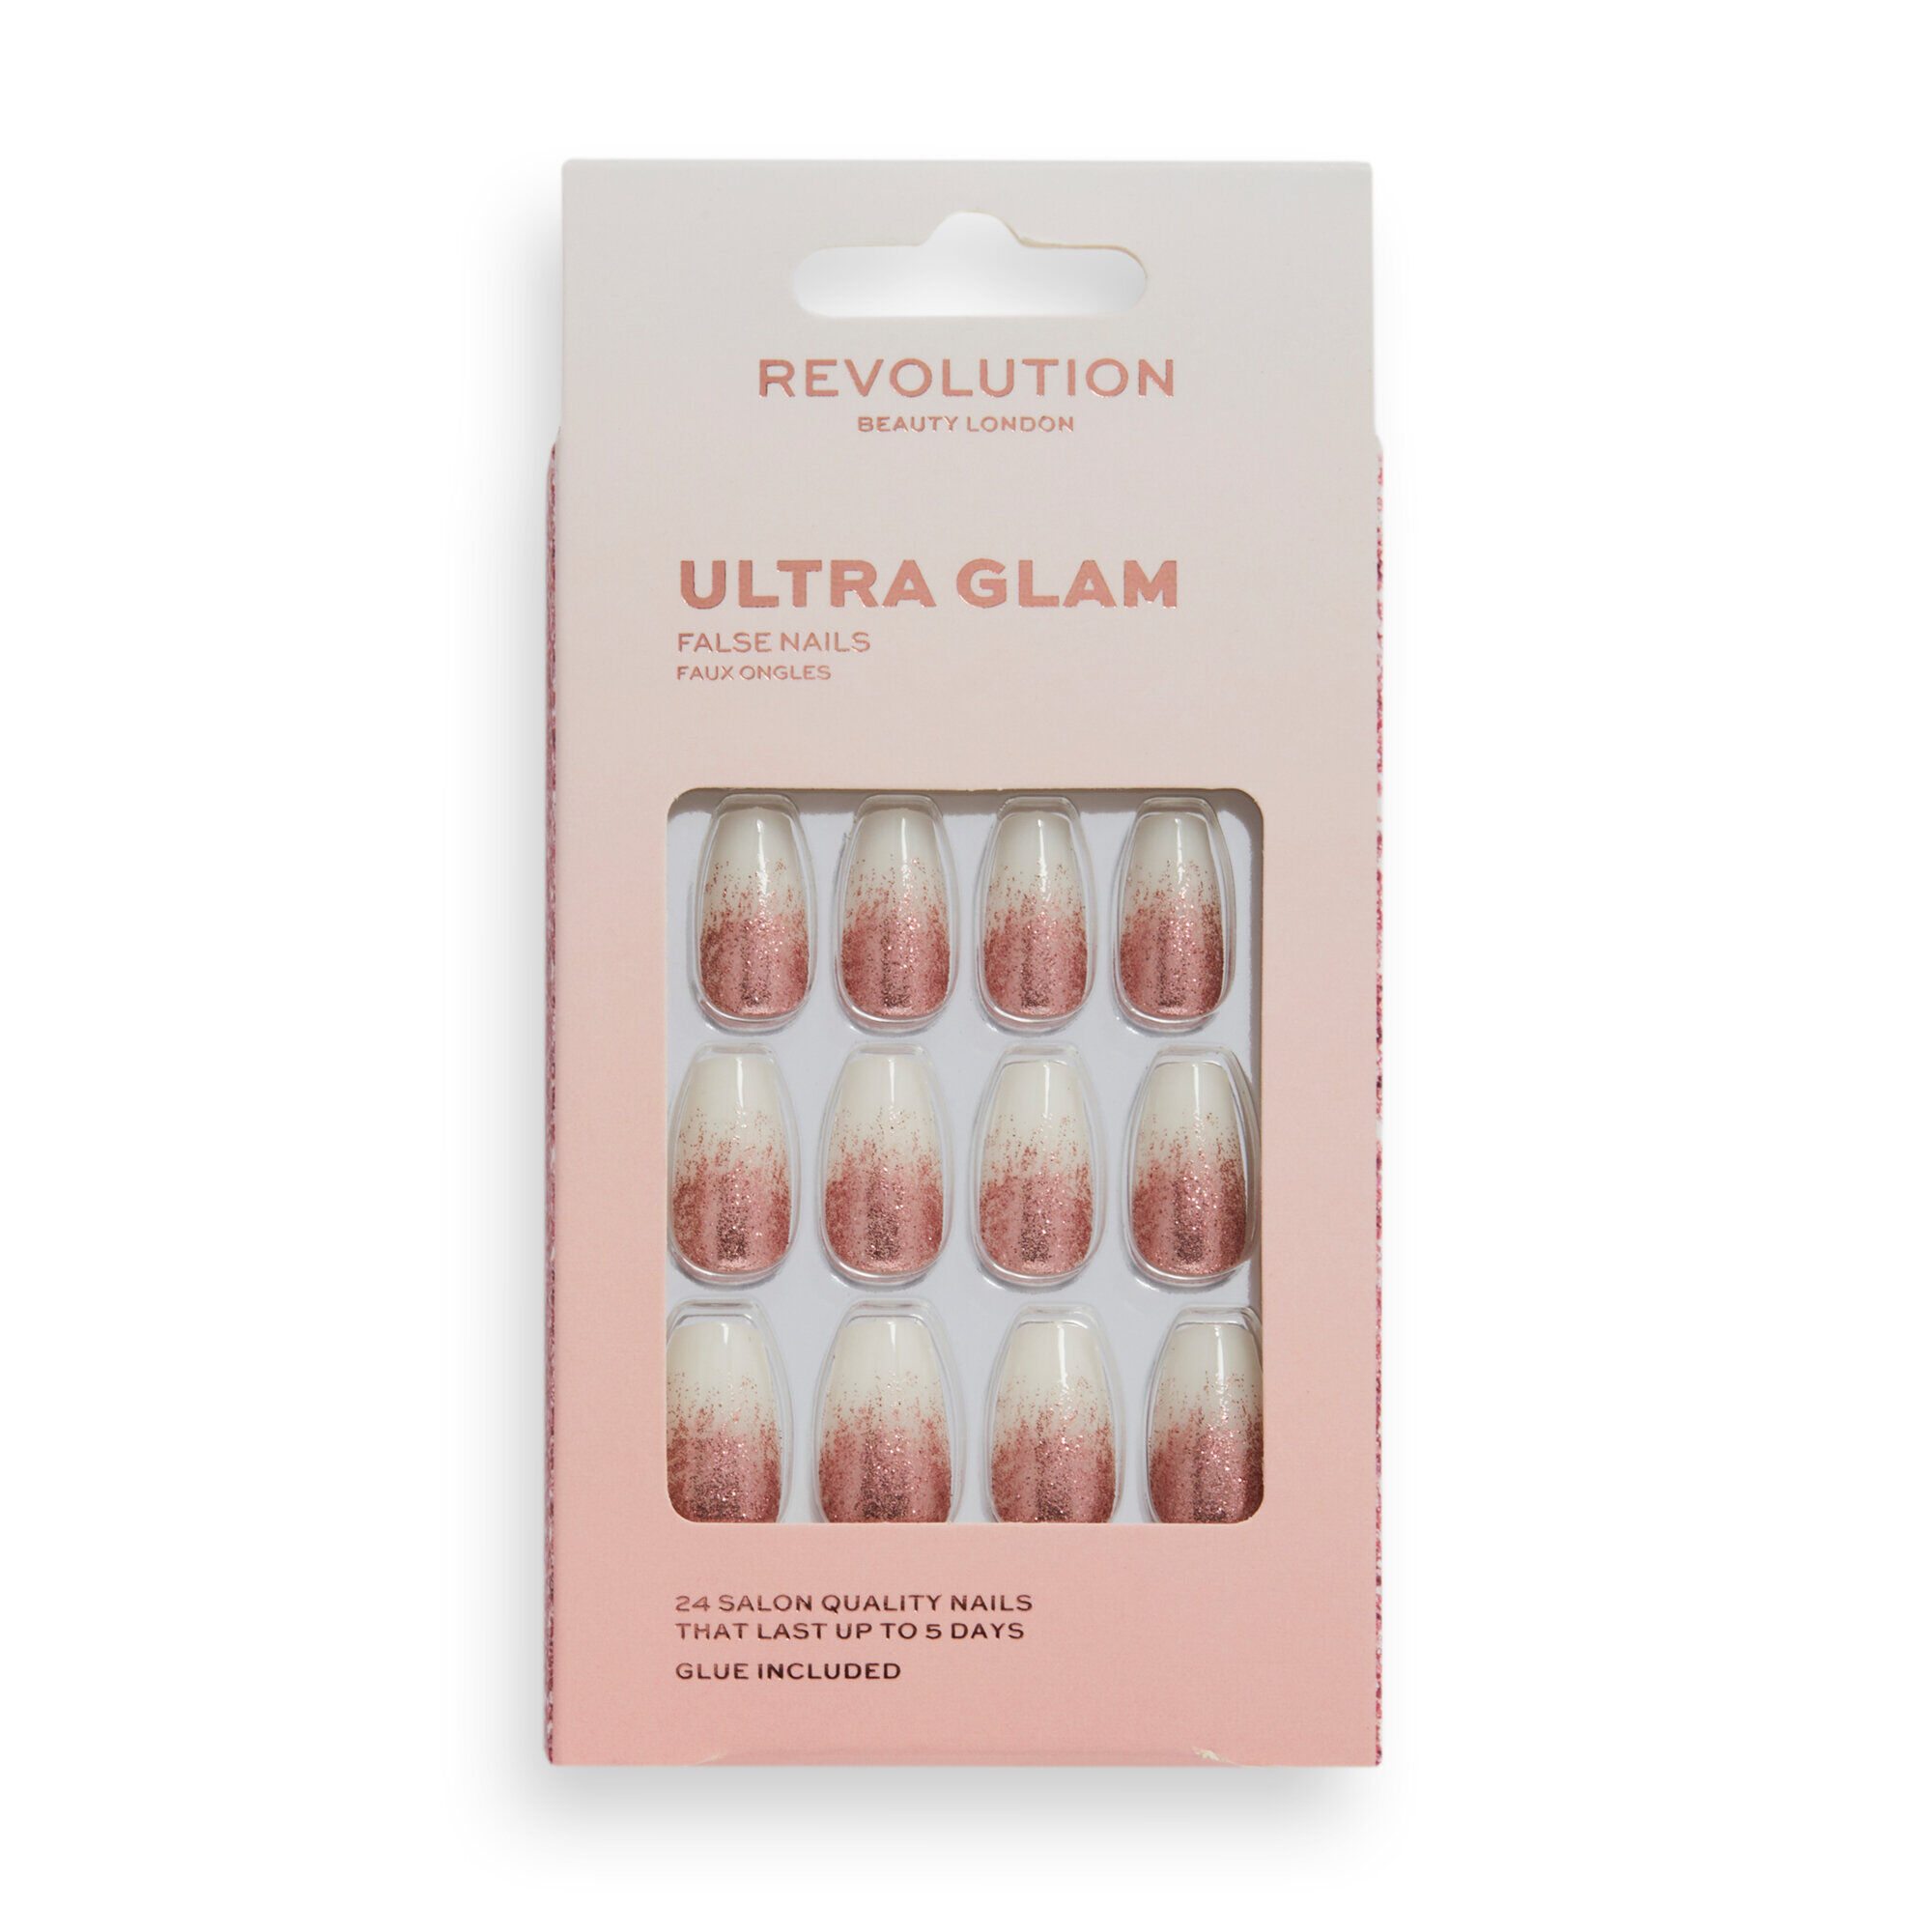 Makeup Revolution Flawless False Nails Ultra Glam | Revolution Beauty